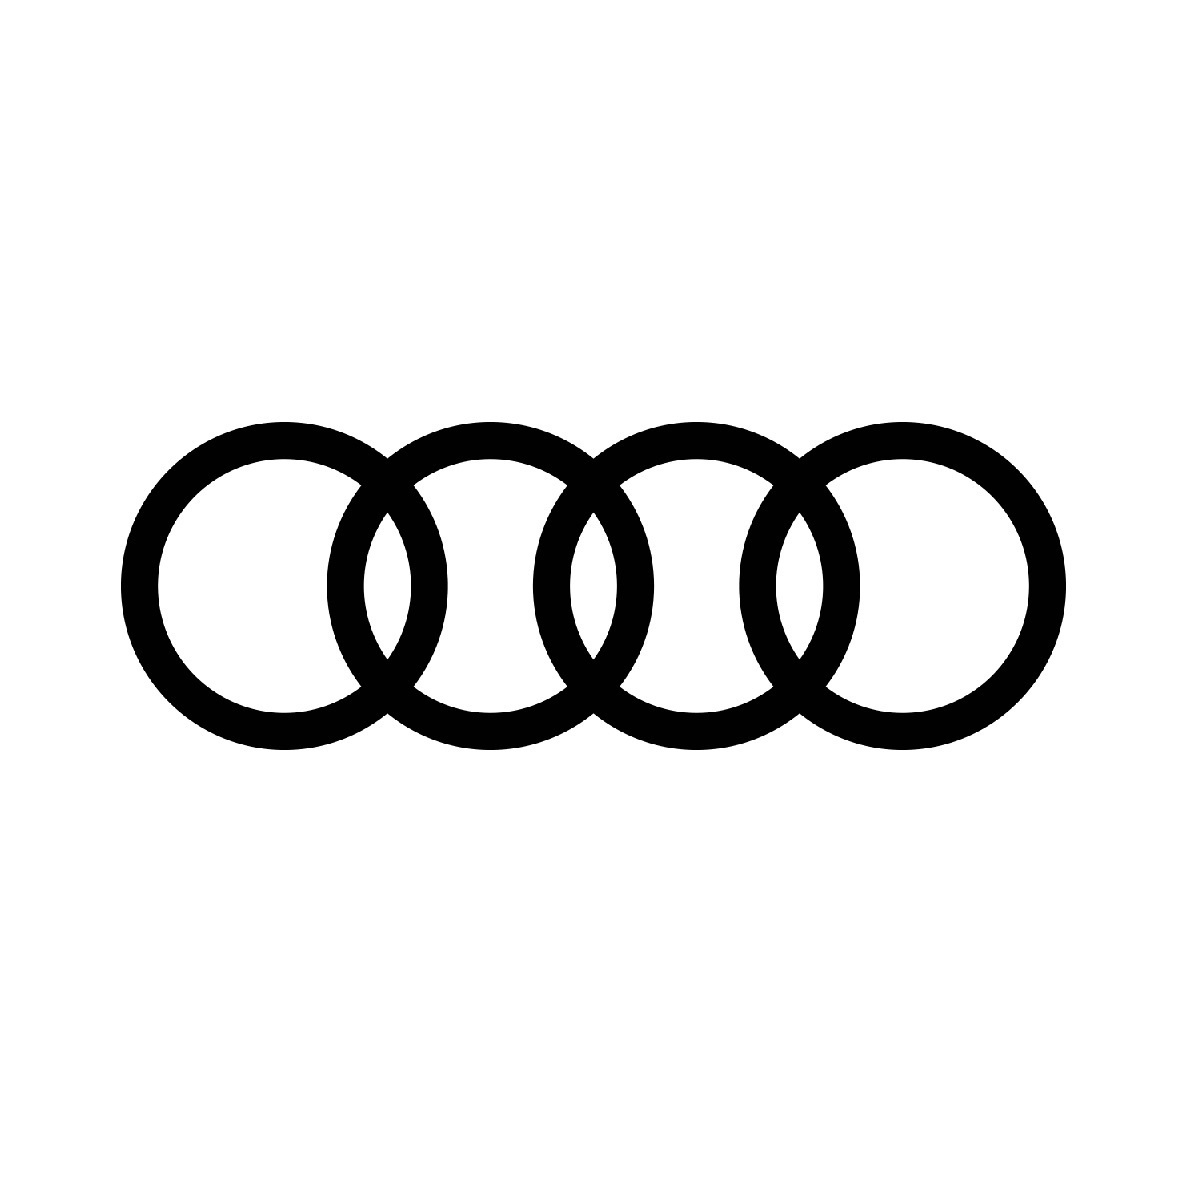 Nowe logo Audi